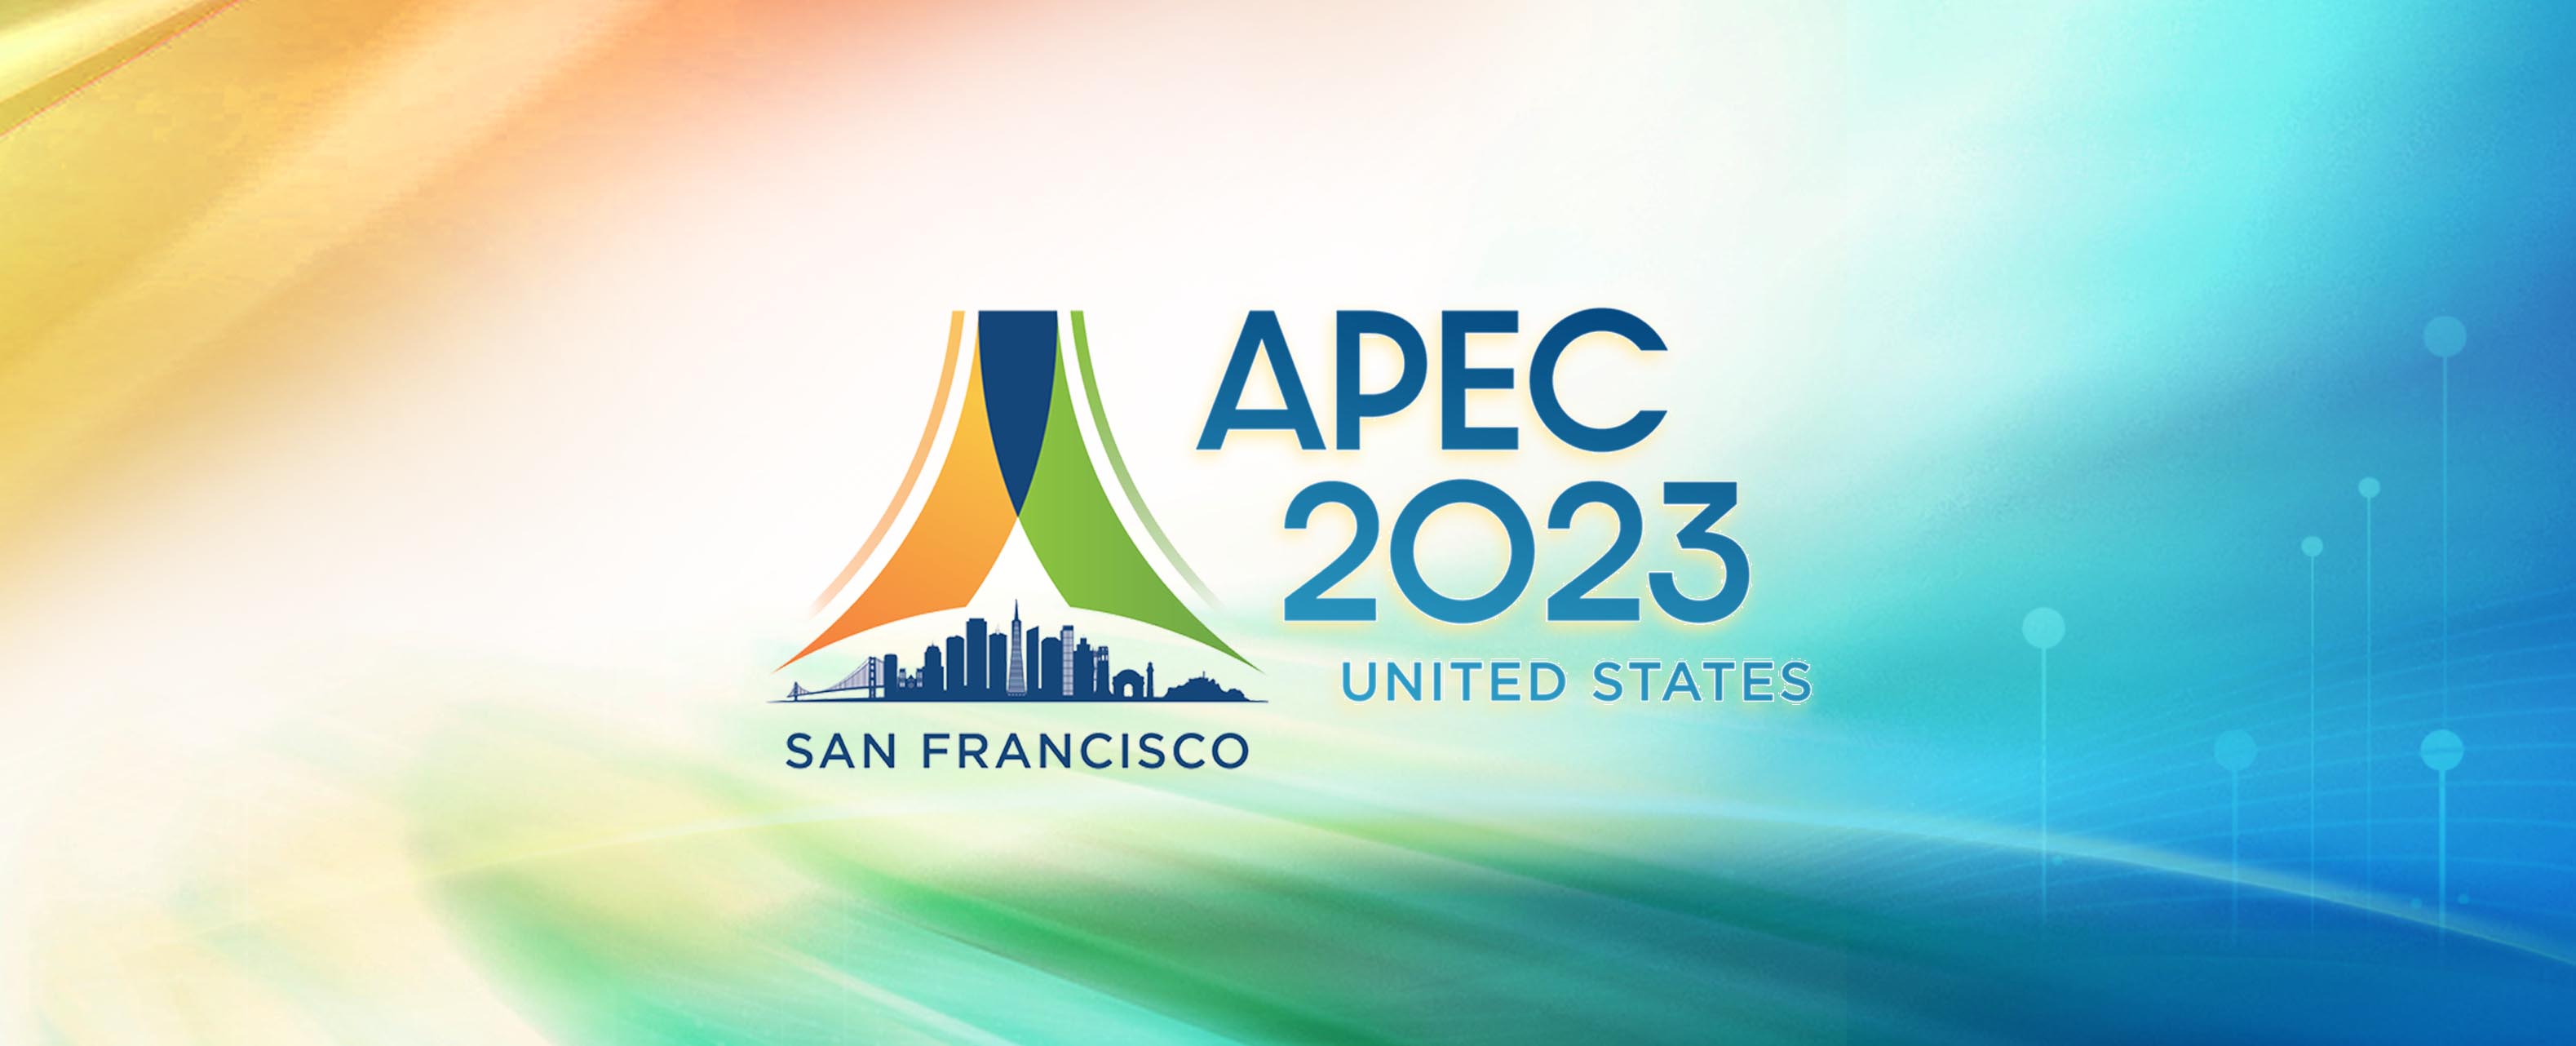 APEC2023 web banner 